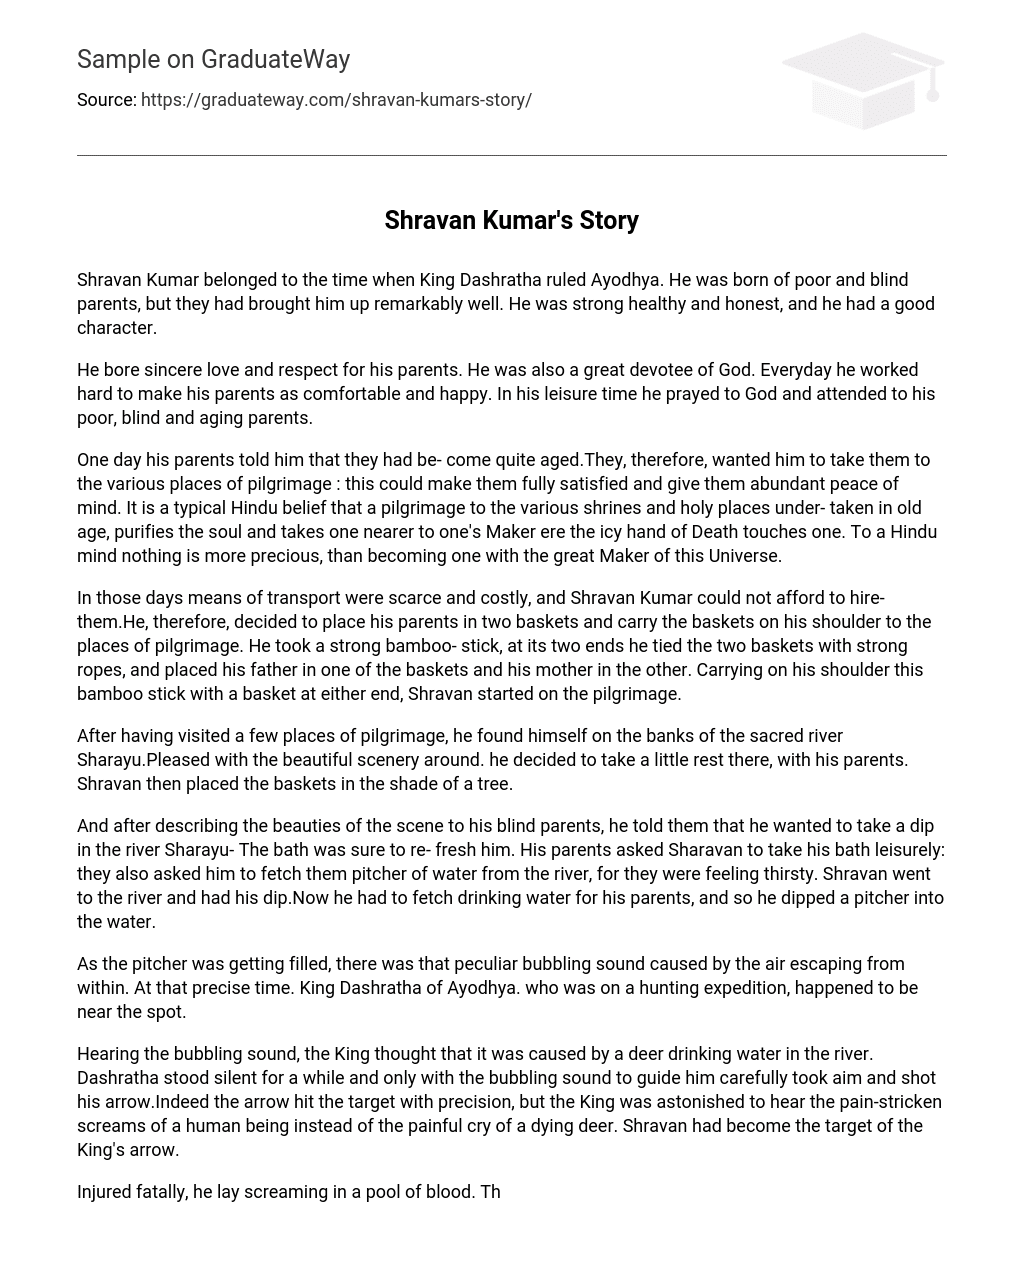 Shravan Kumar’s Story